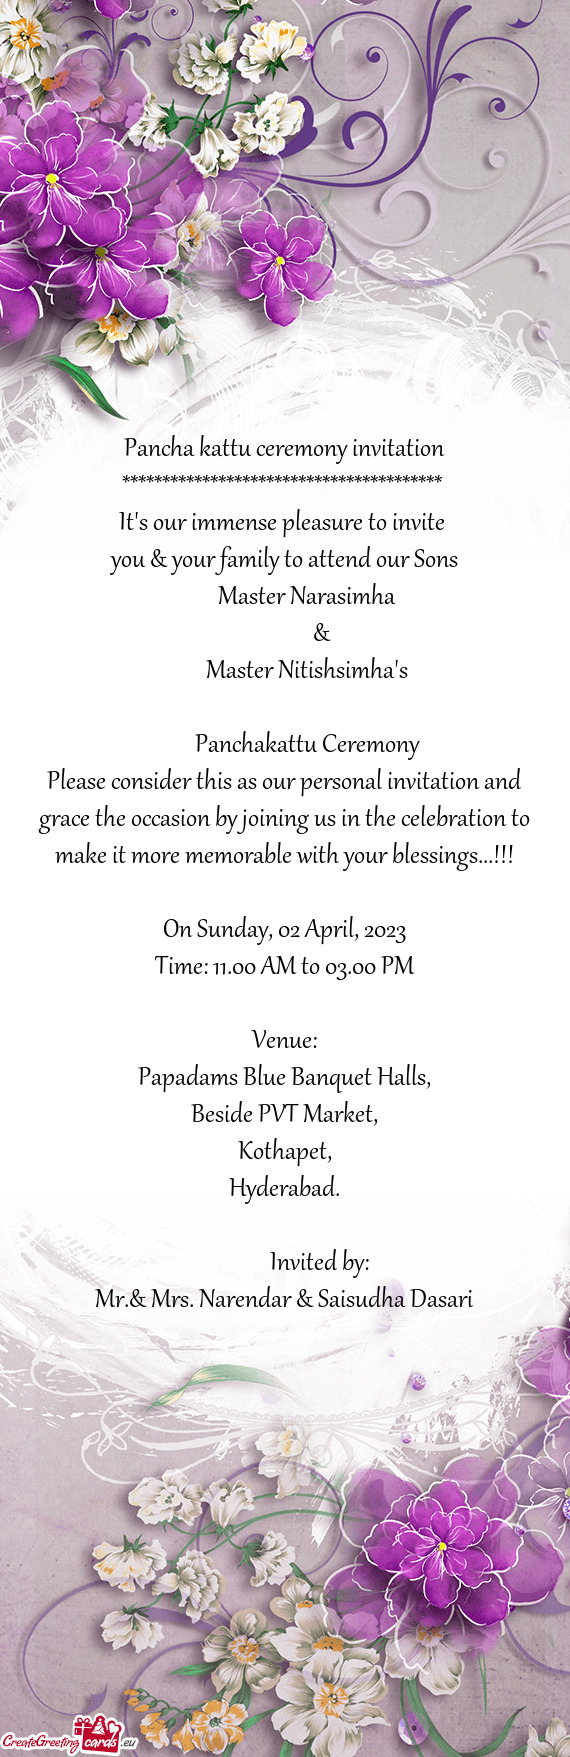 Pancha kattu ceremony invitation